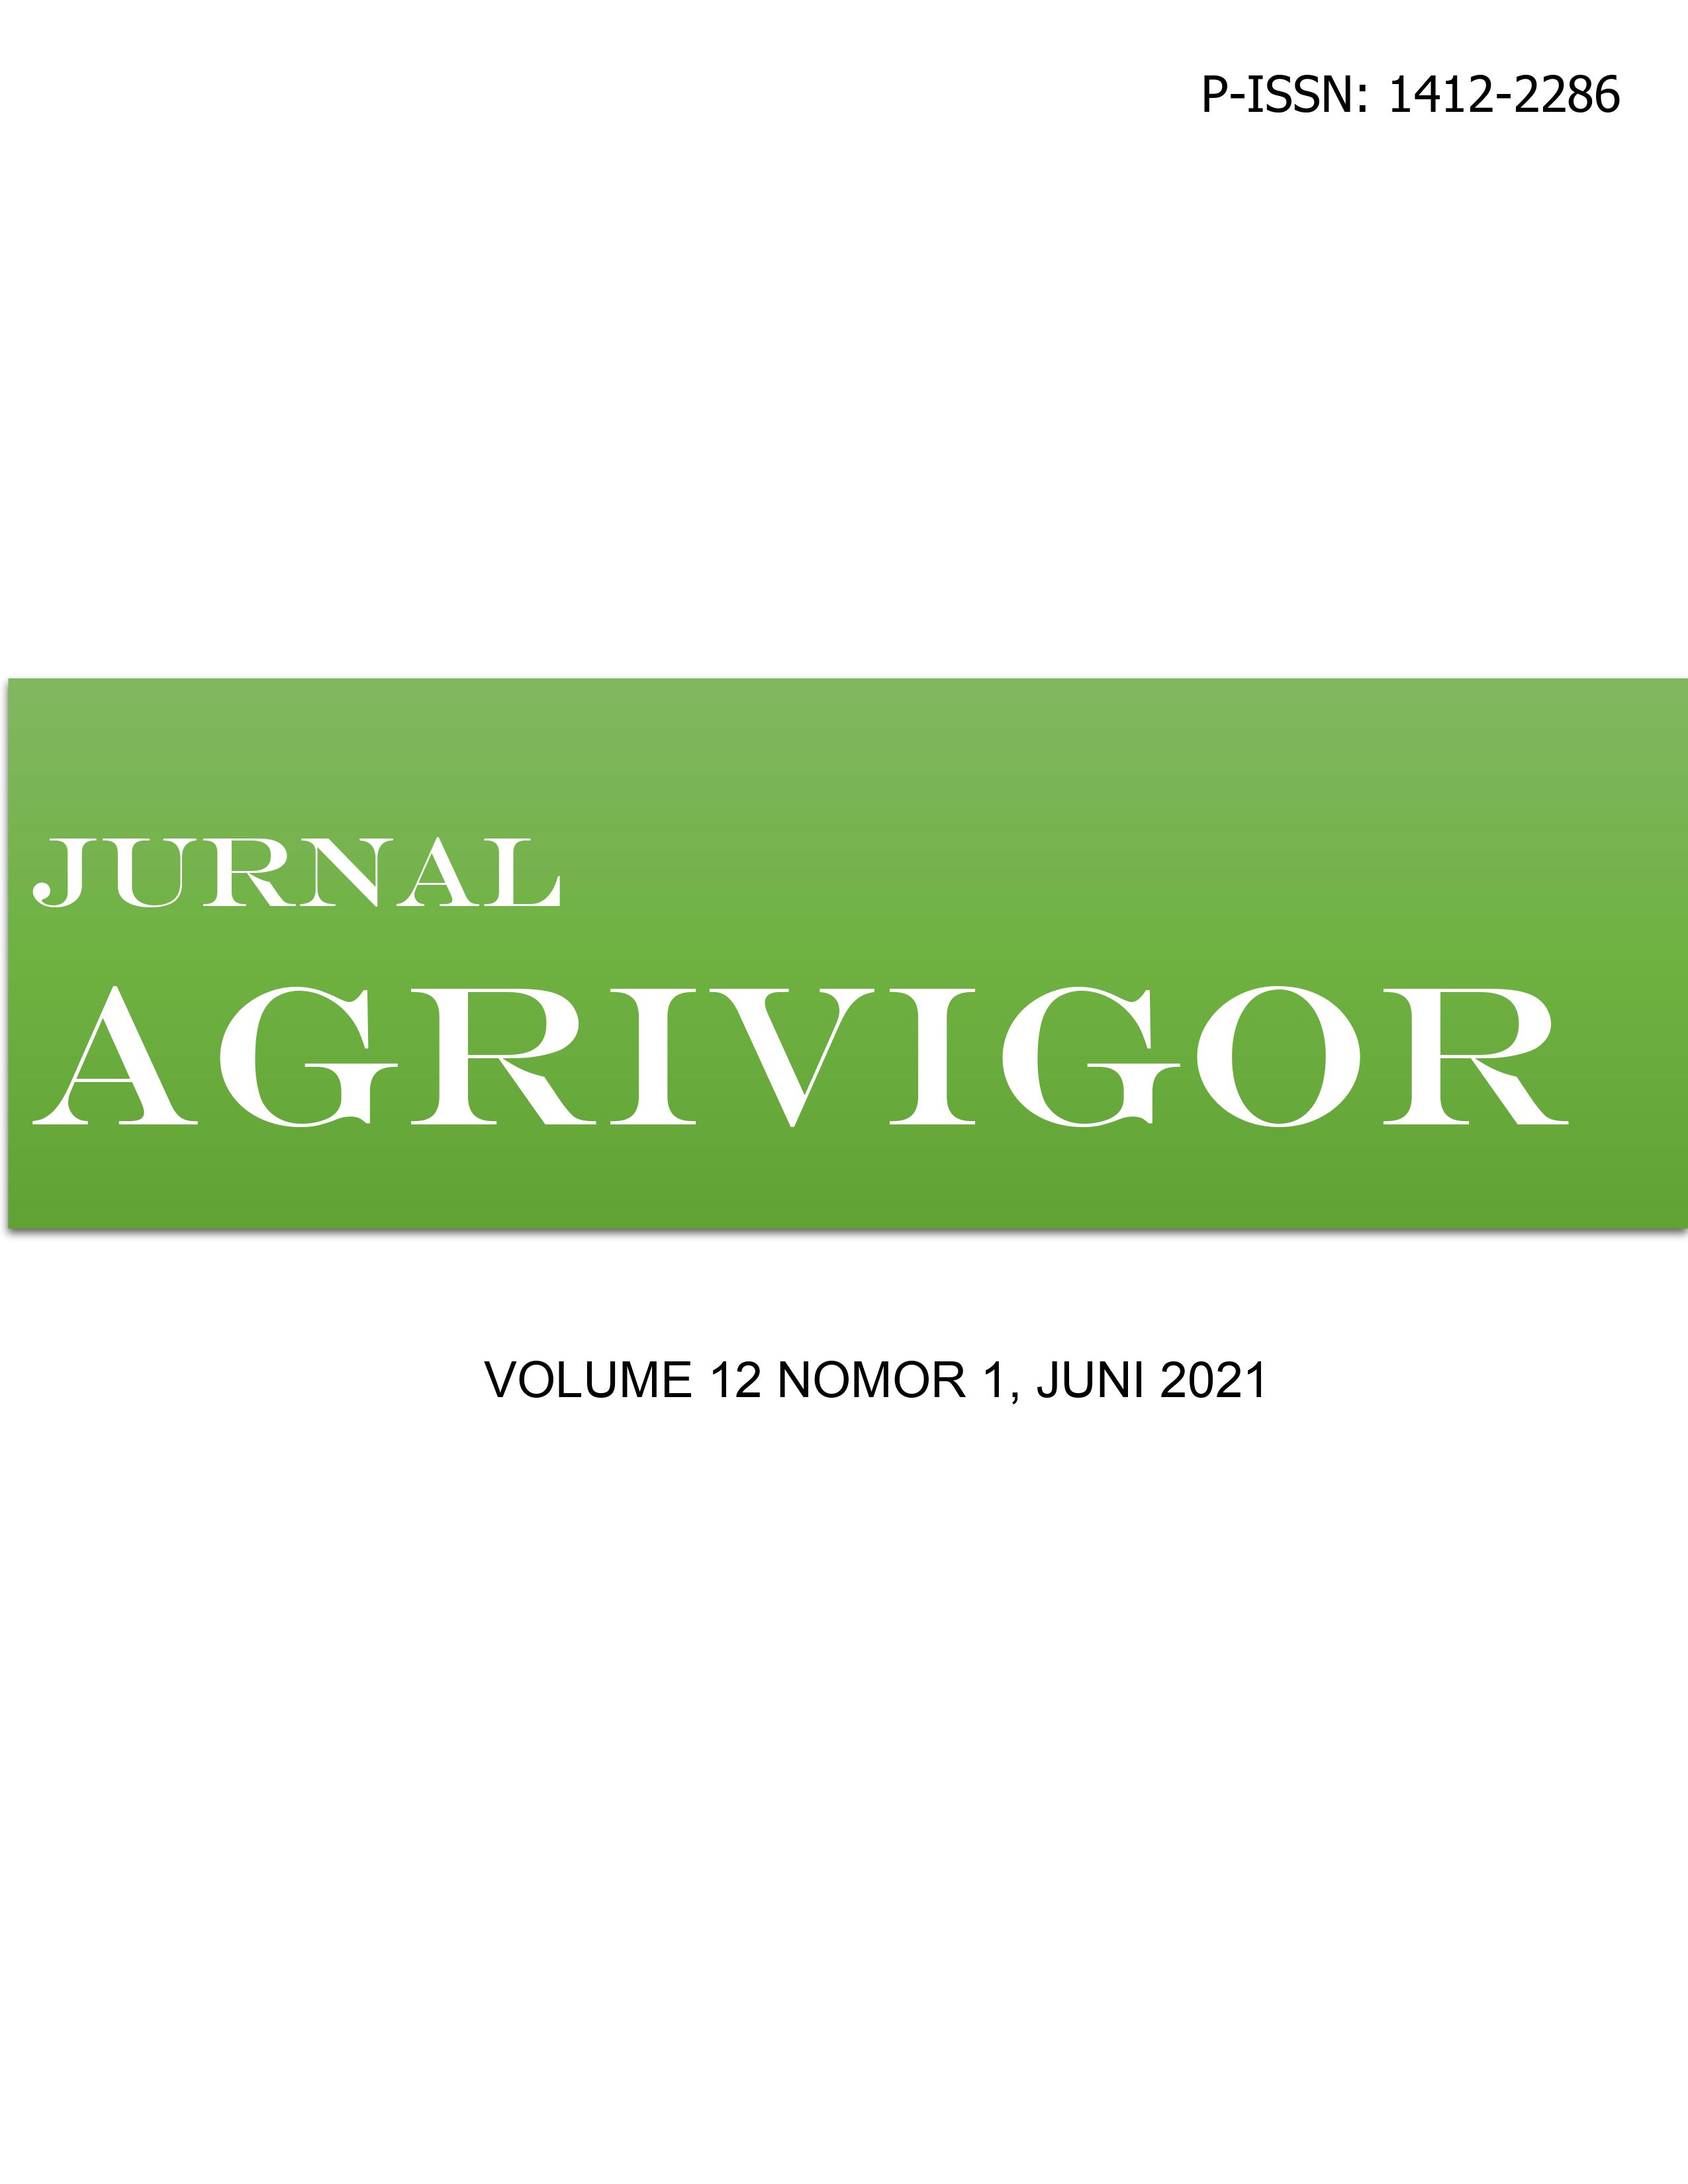 					View Vol. 12 No. 1 (2021): JURNAL AGRIVIGOR, VOL. 12, NO. 1, JUNI 2021
				